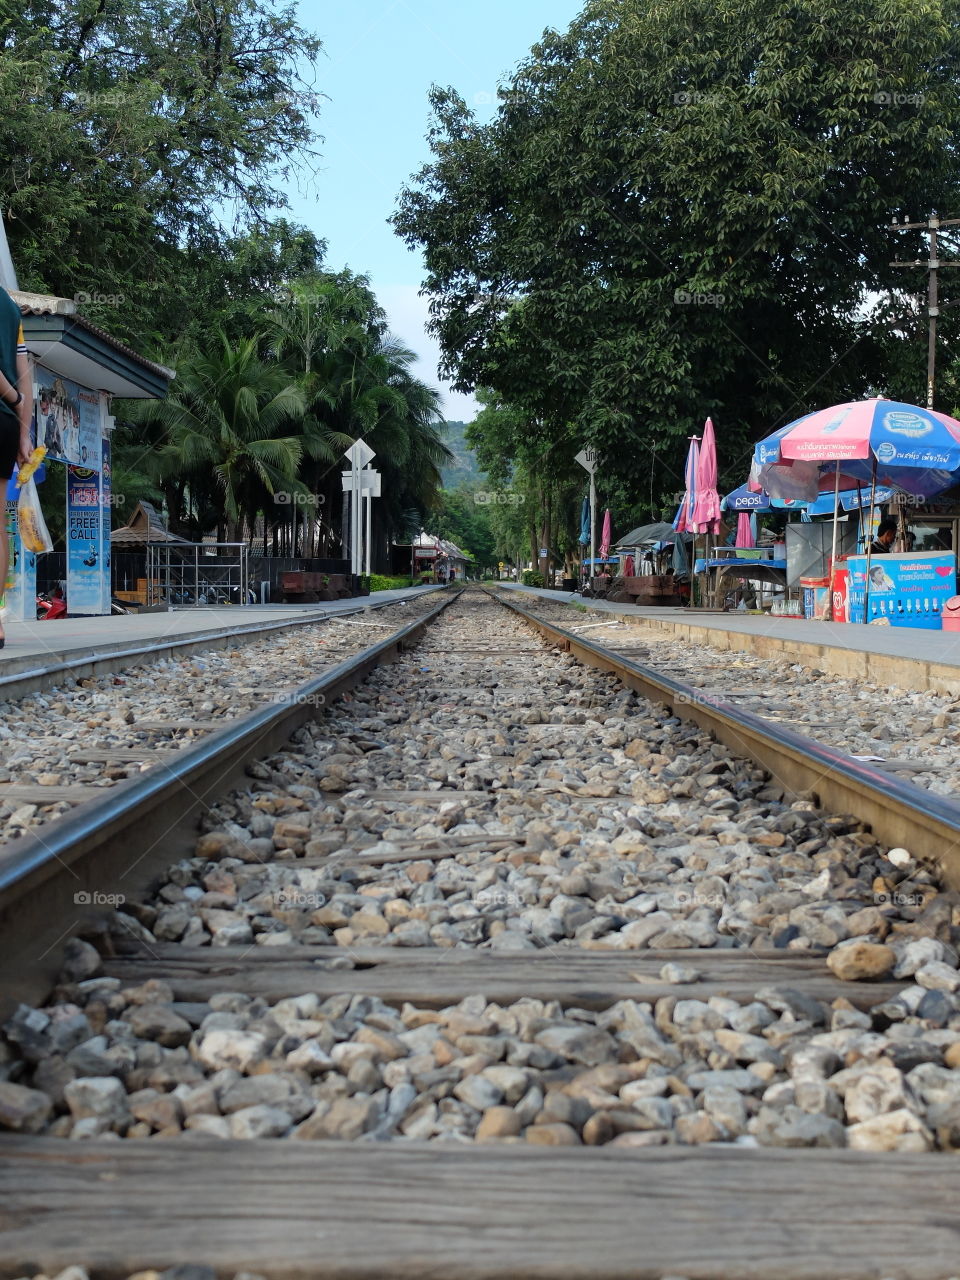 The railway in Thailand